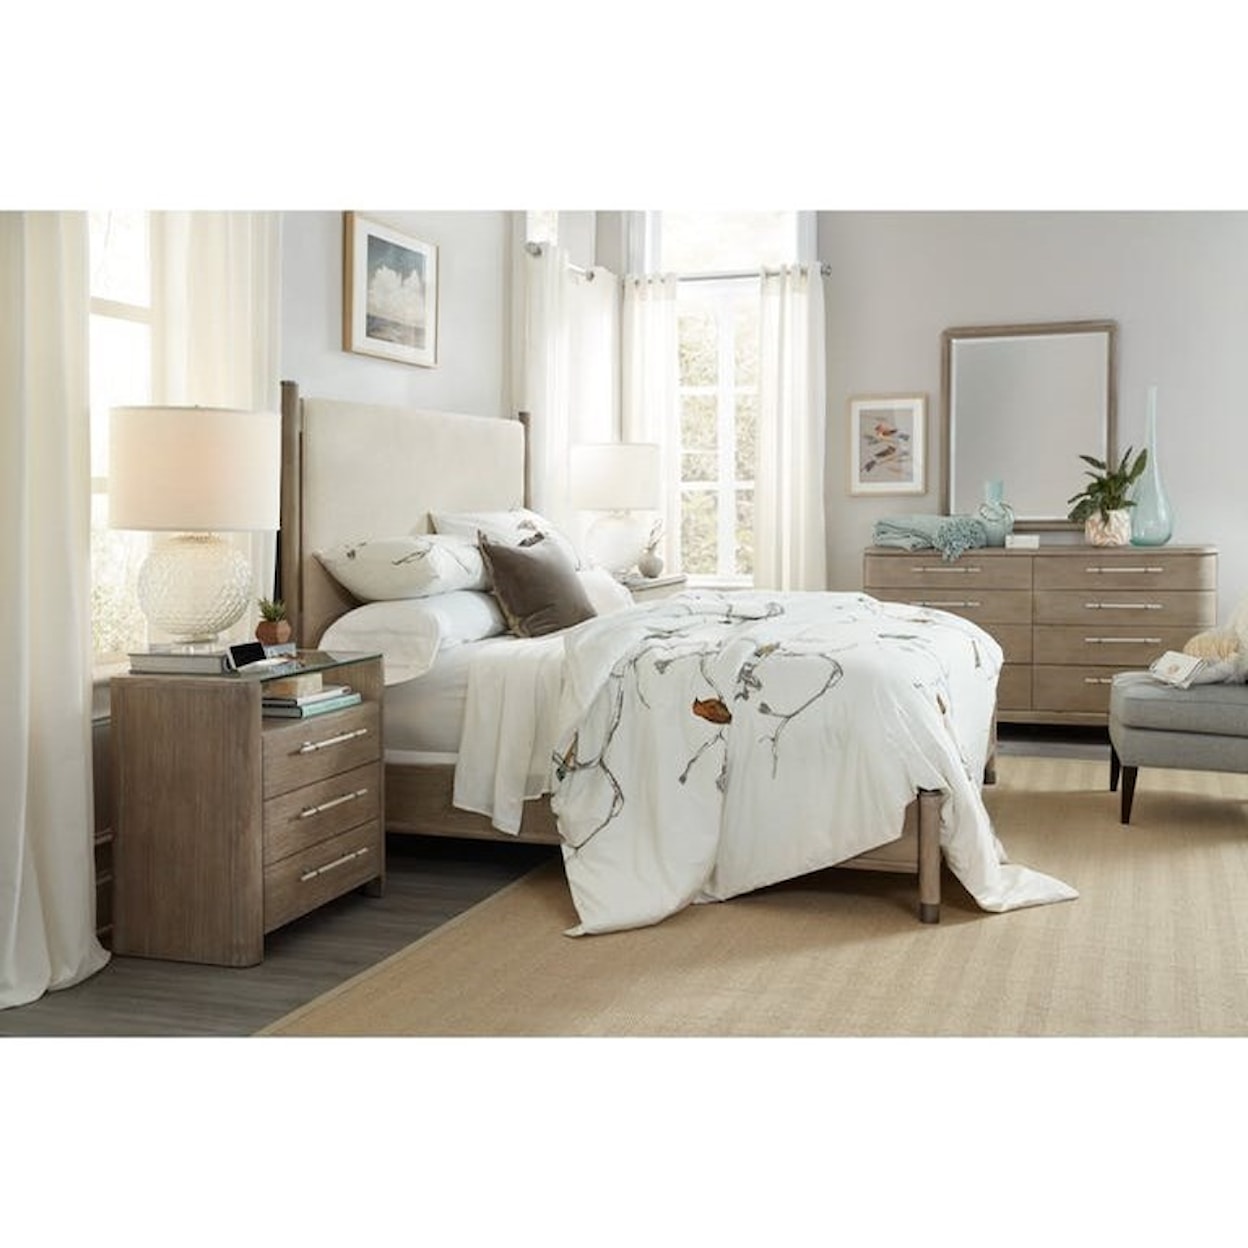 Hooker Furniture Affinity Queen Bedroom Group